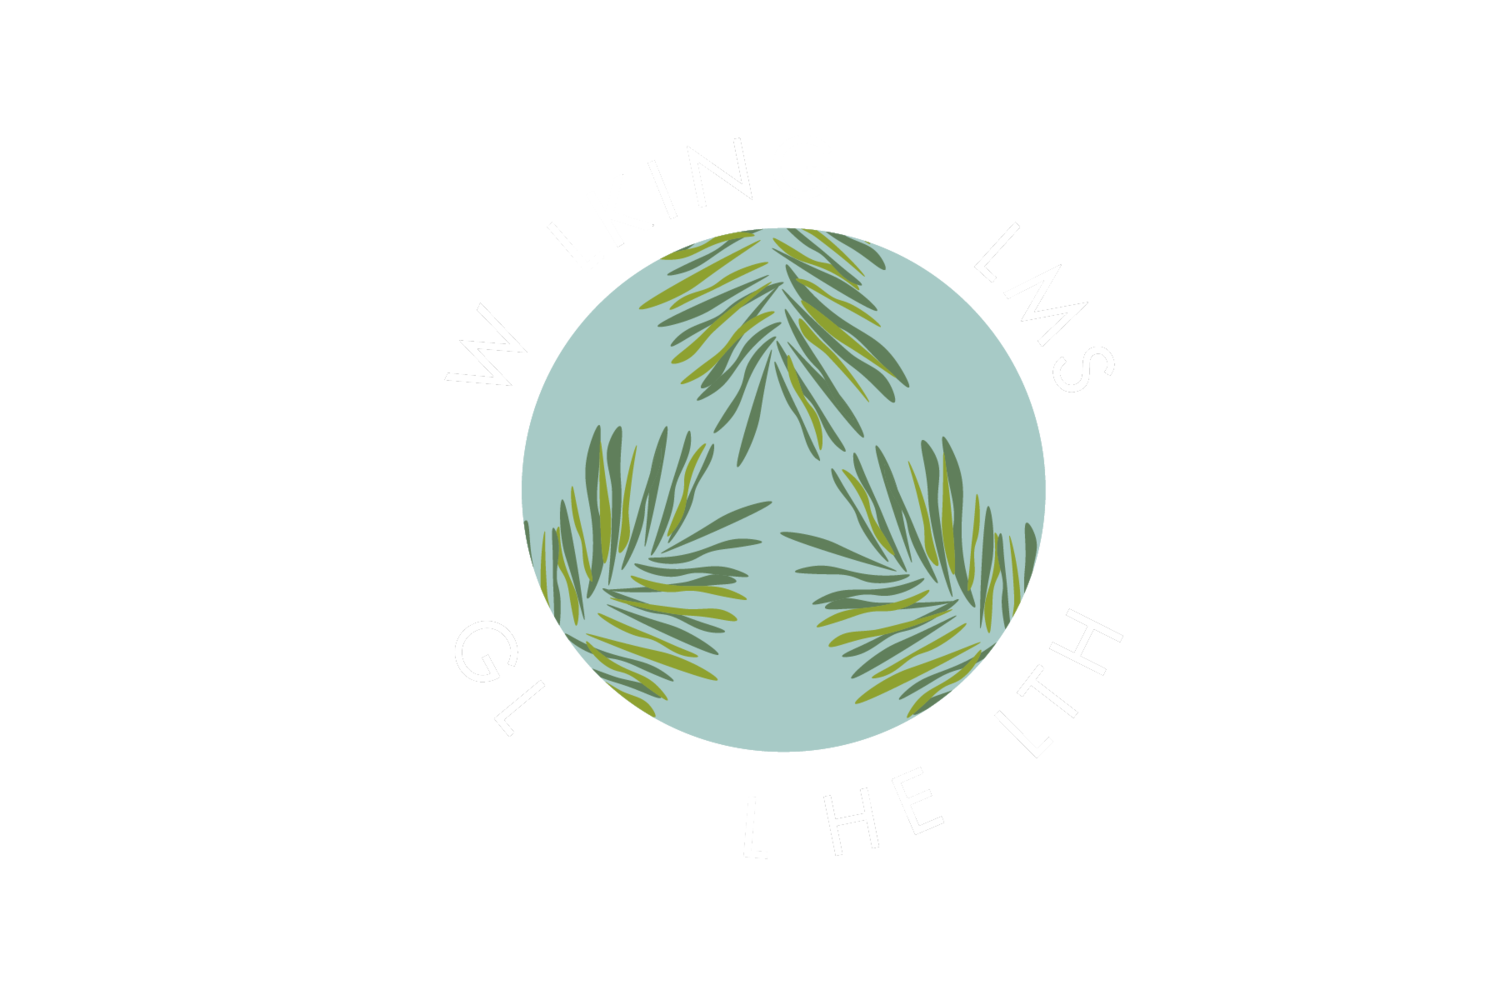 Walking Palms Global Health